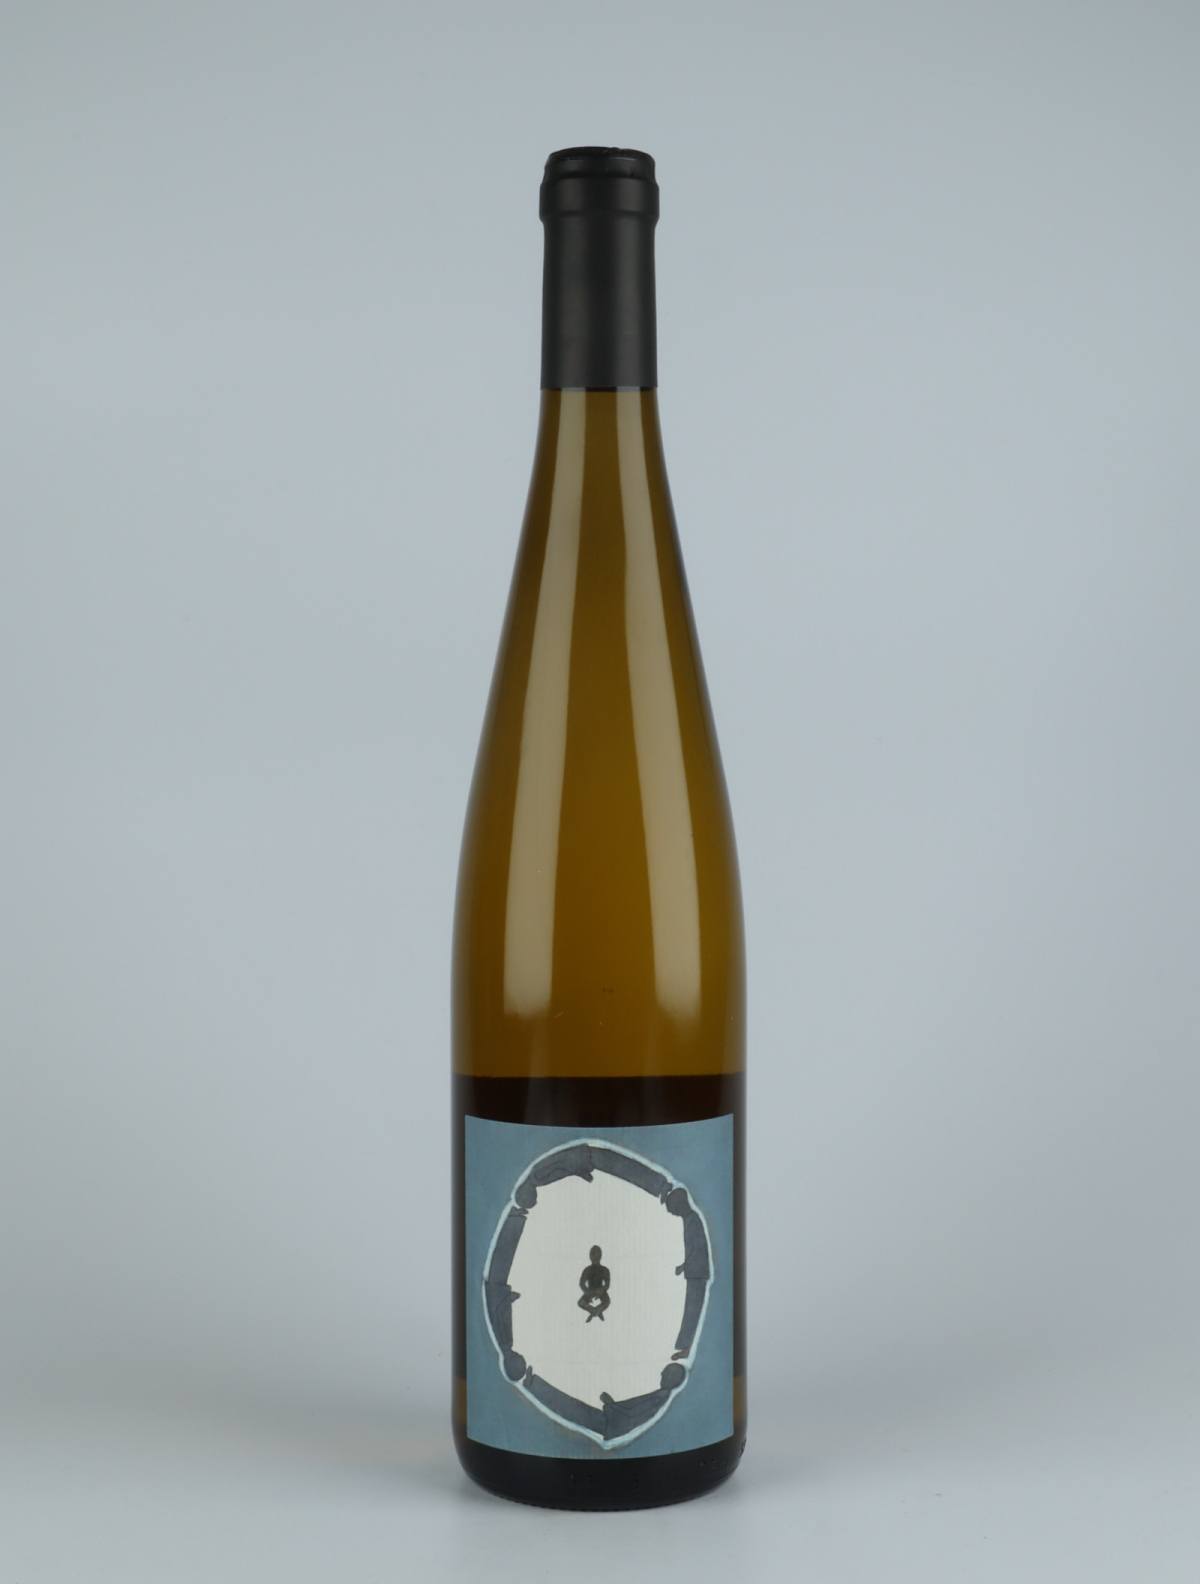 A bottle 2018 Quelqu'un Orange wine from , Alsace in France